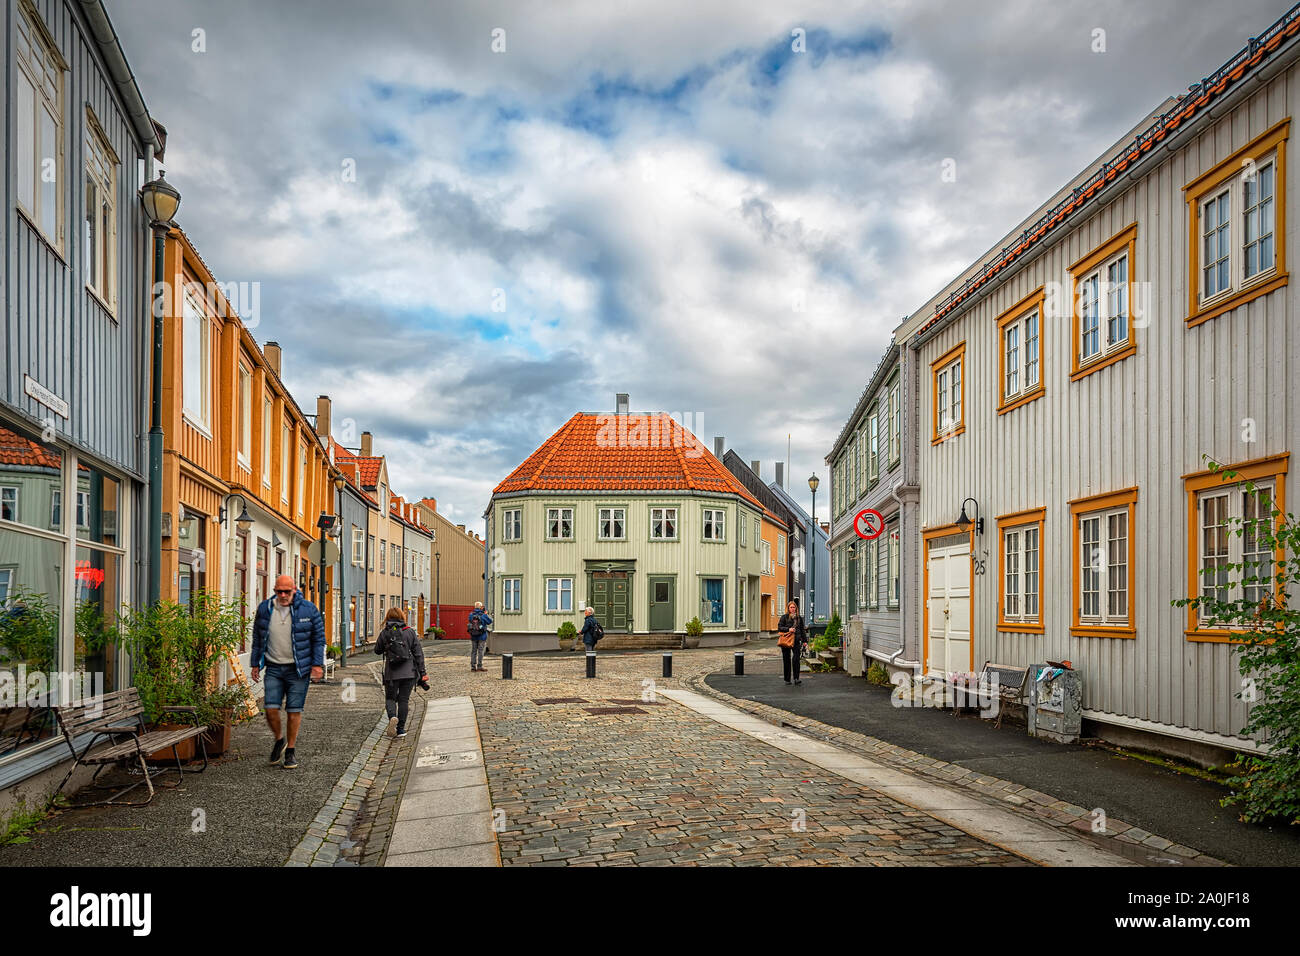 TRONDHEIM, NORWAY - SEPTEMBER 07, 2019: Bakklandet is an old town neighborhood in the city of Trondheim. Stock Photo